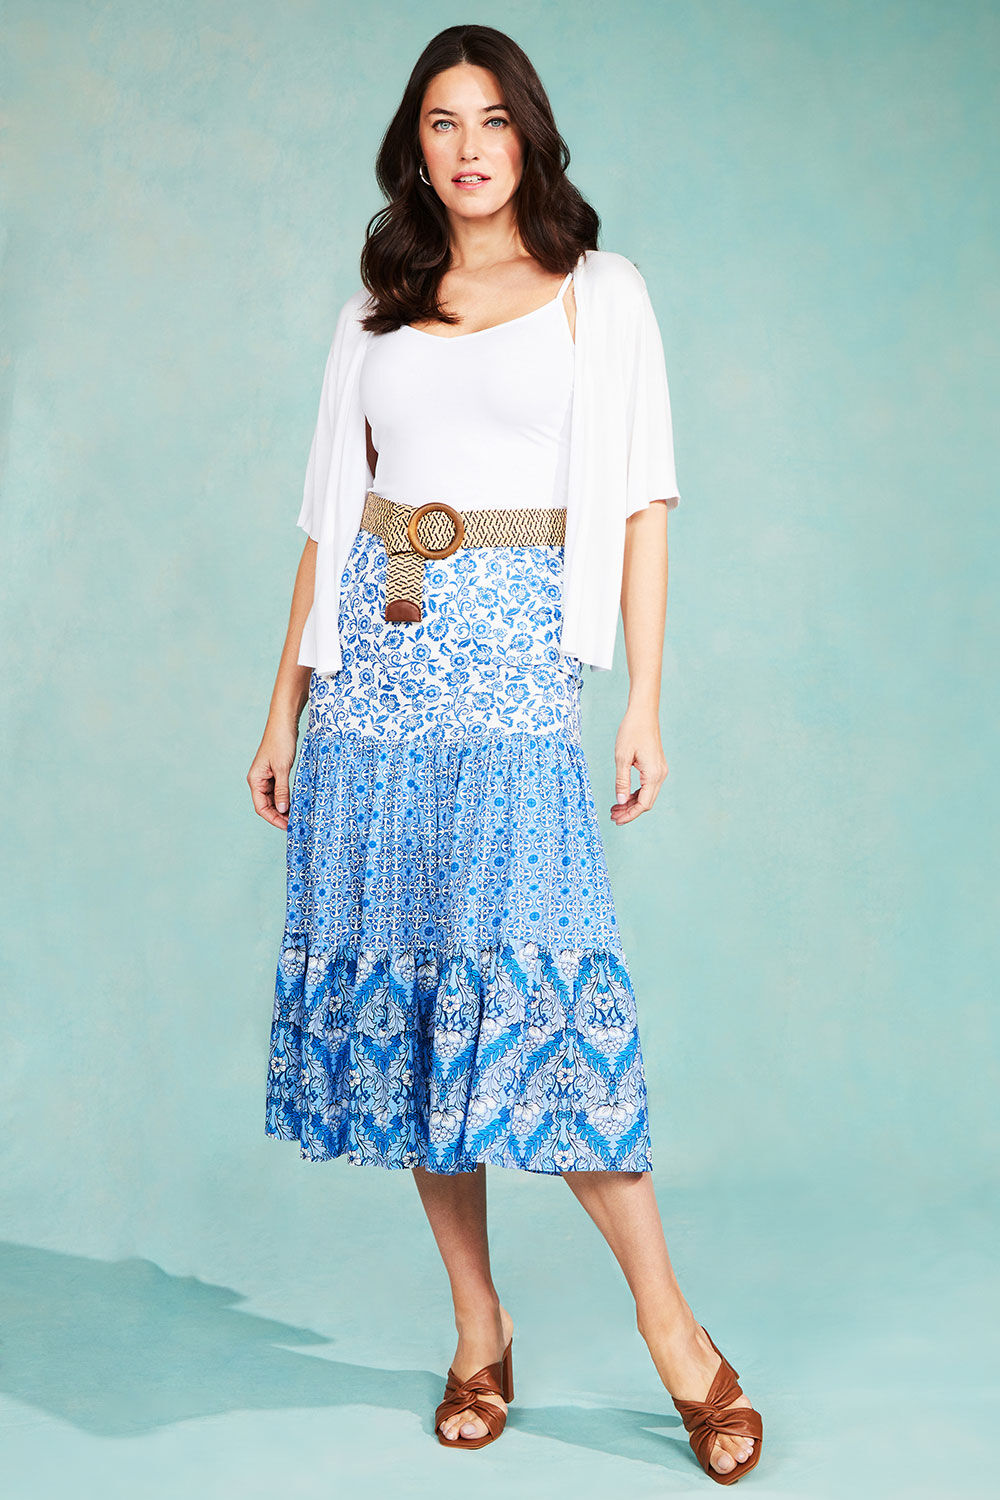 Bonmarche Blue Tile Print Tiered Cotton Elasticated Skirt, Size: 10